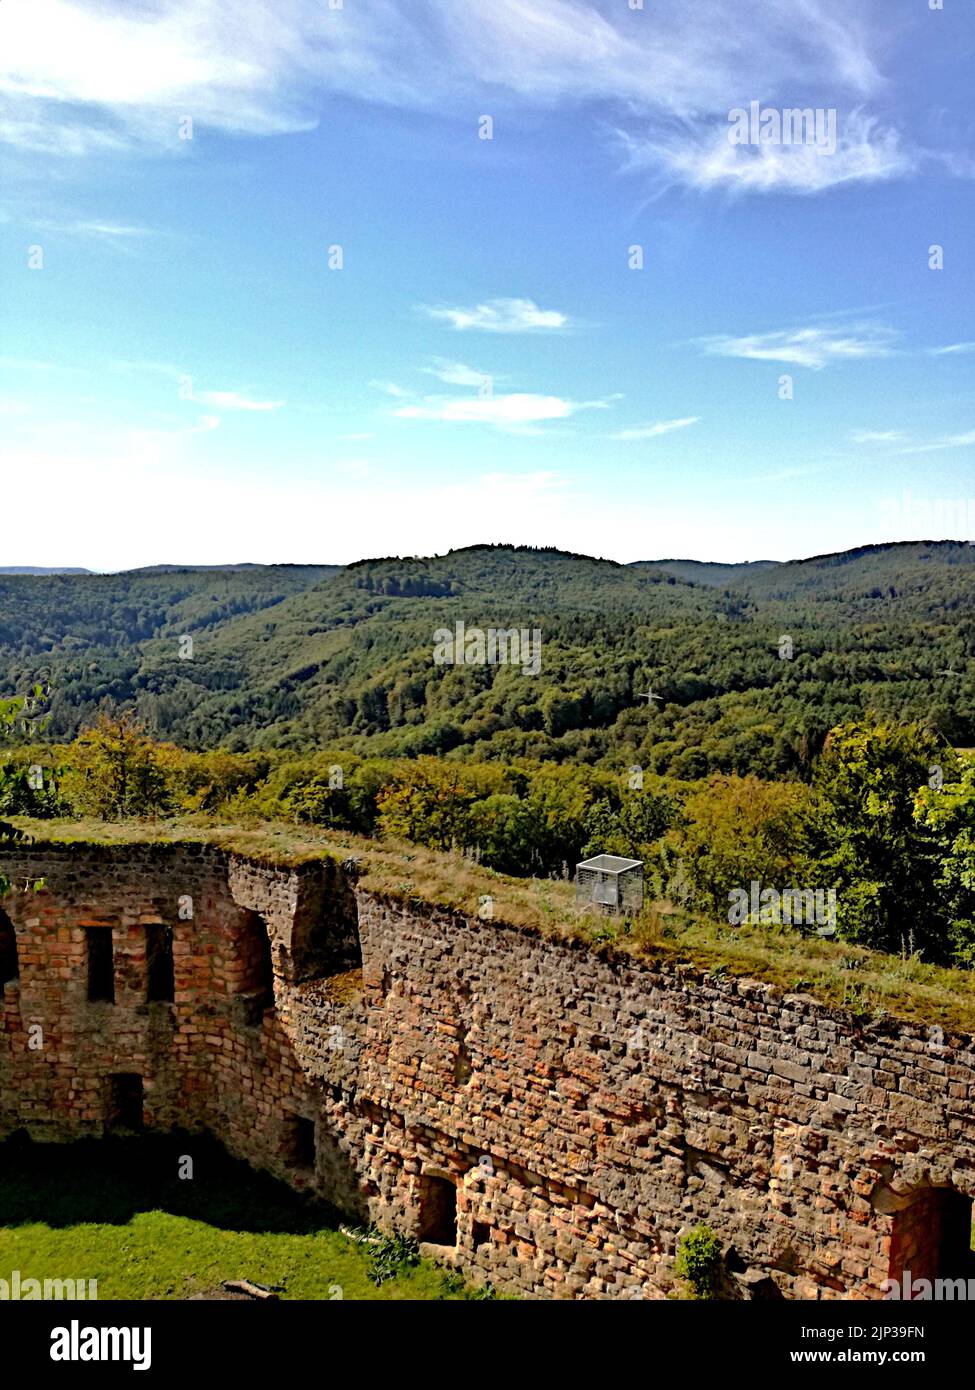 A vertical shot of Grafenstein castle in green mountains in Merzalben, Germany Stock Photo